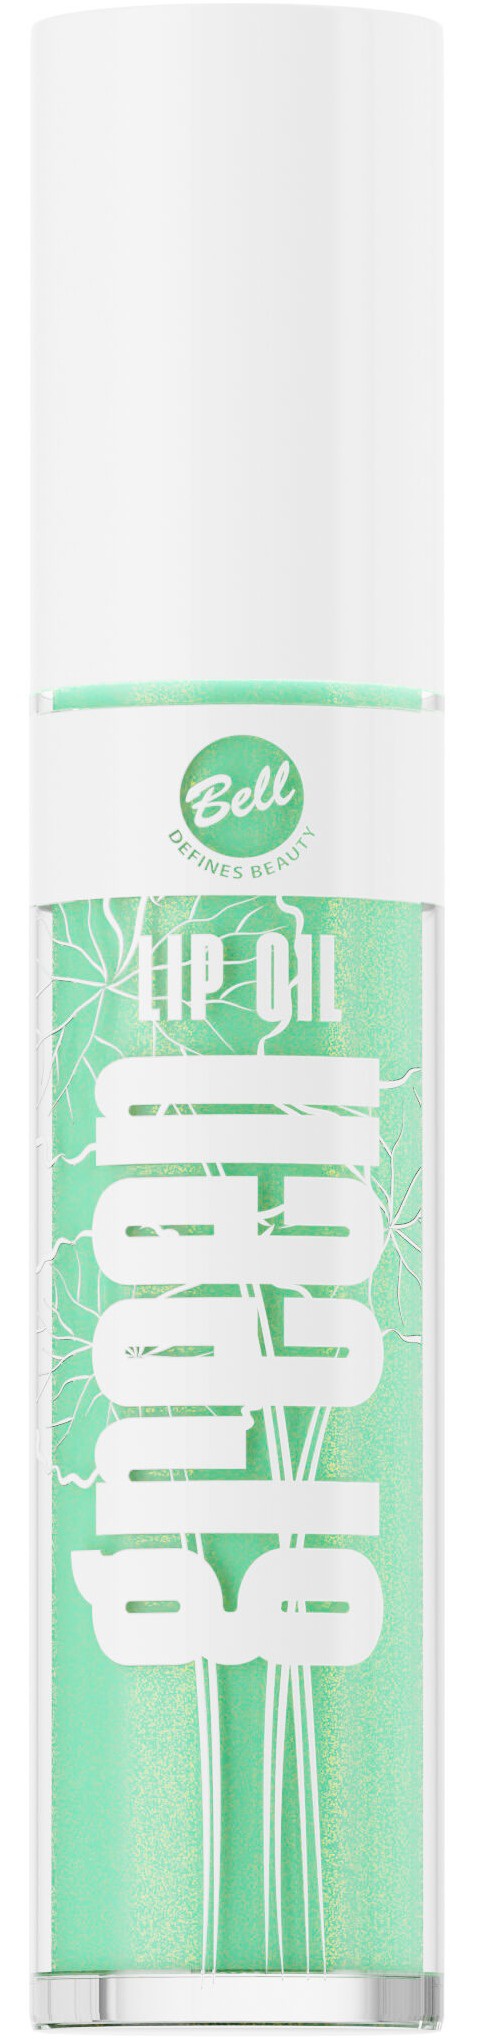 Bell Green Lip Oil